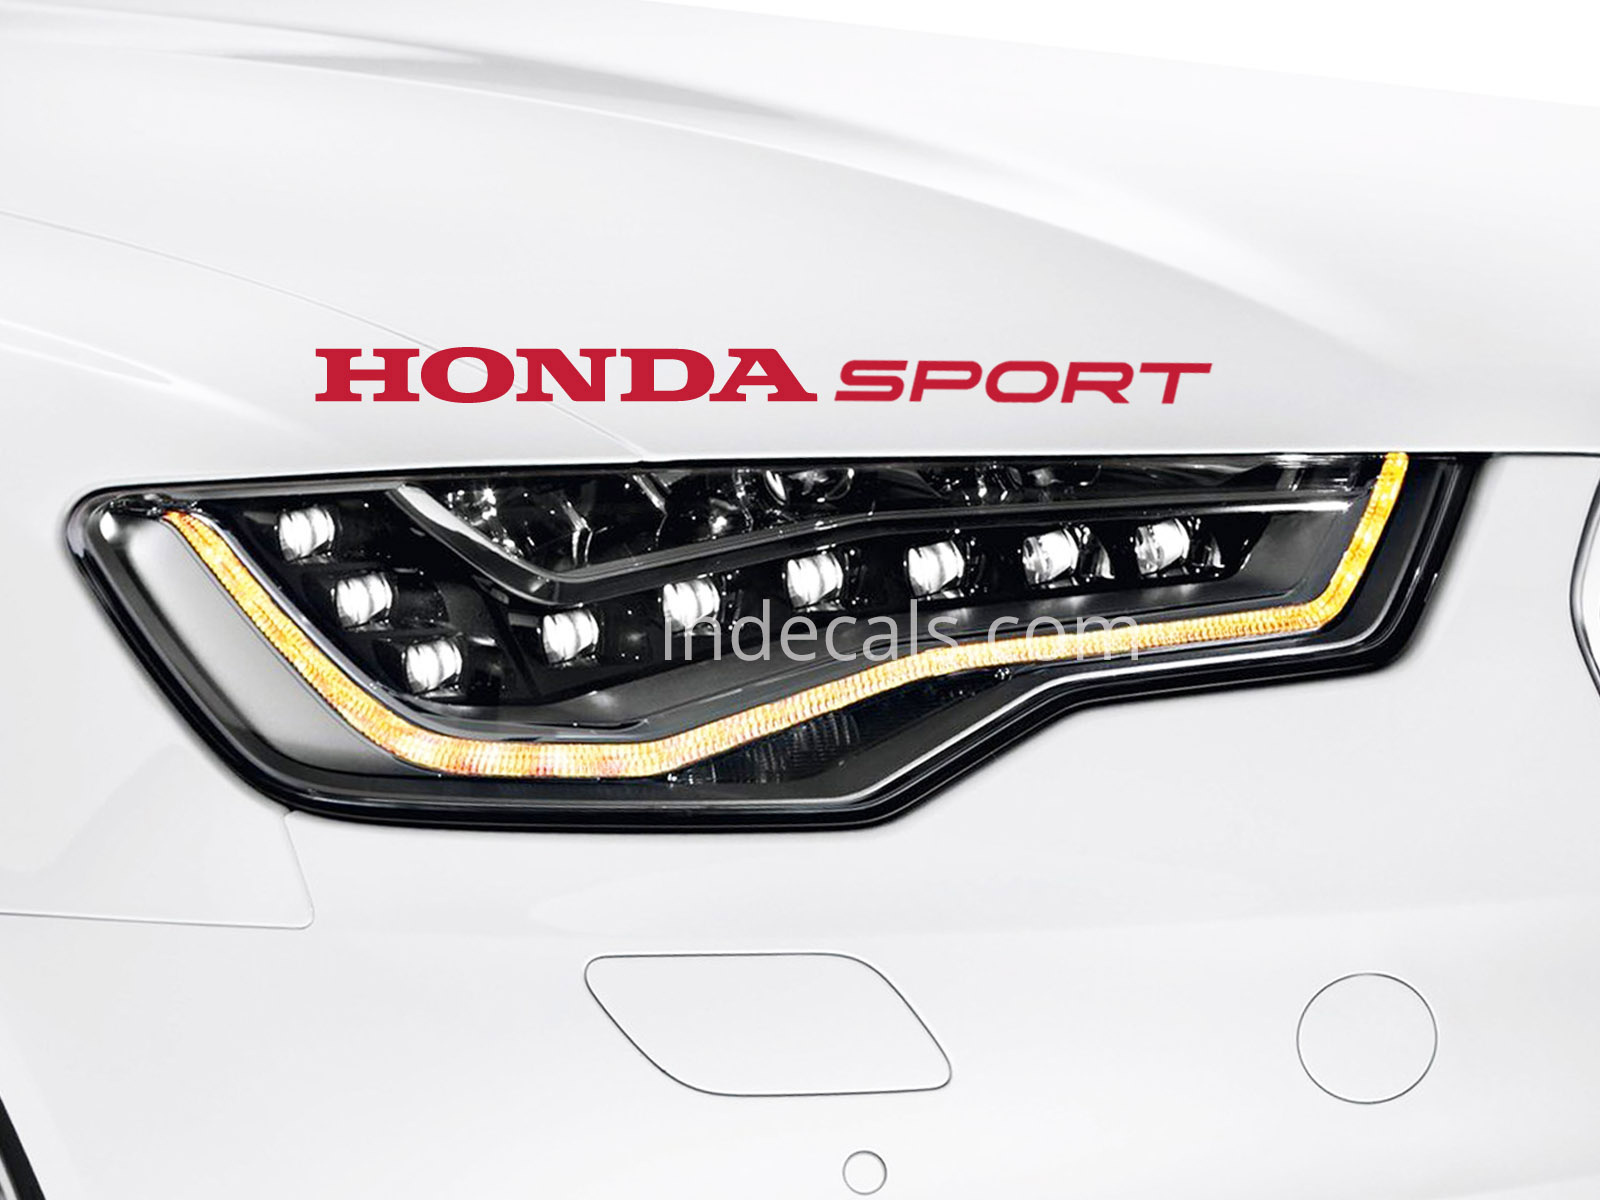 1 x Honda Sport Sticker - Red